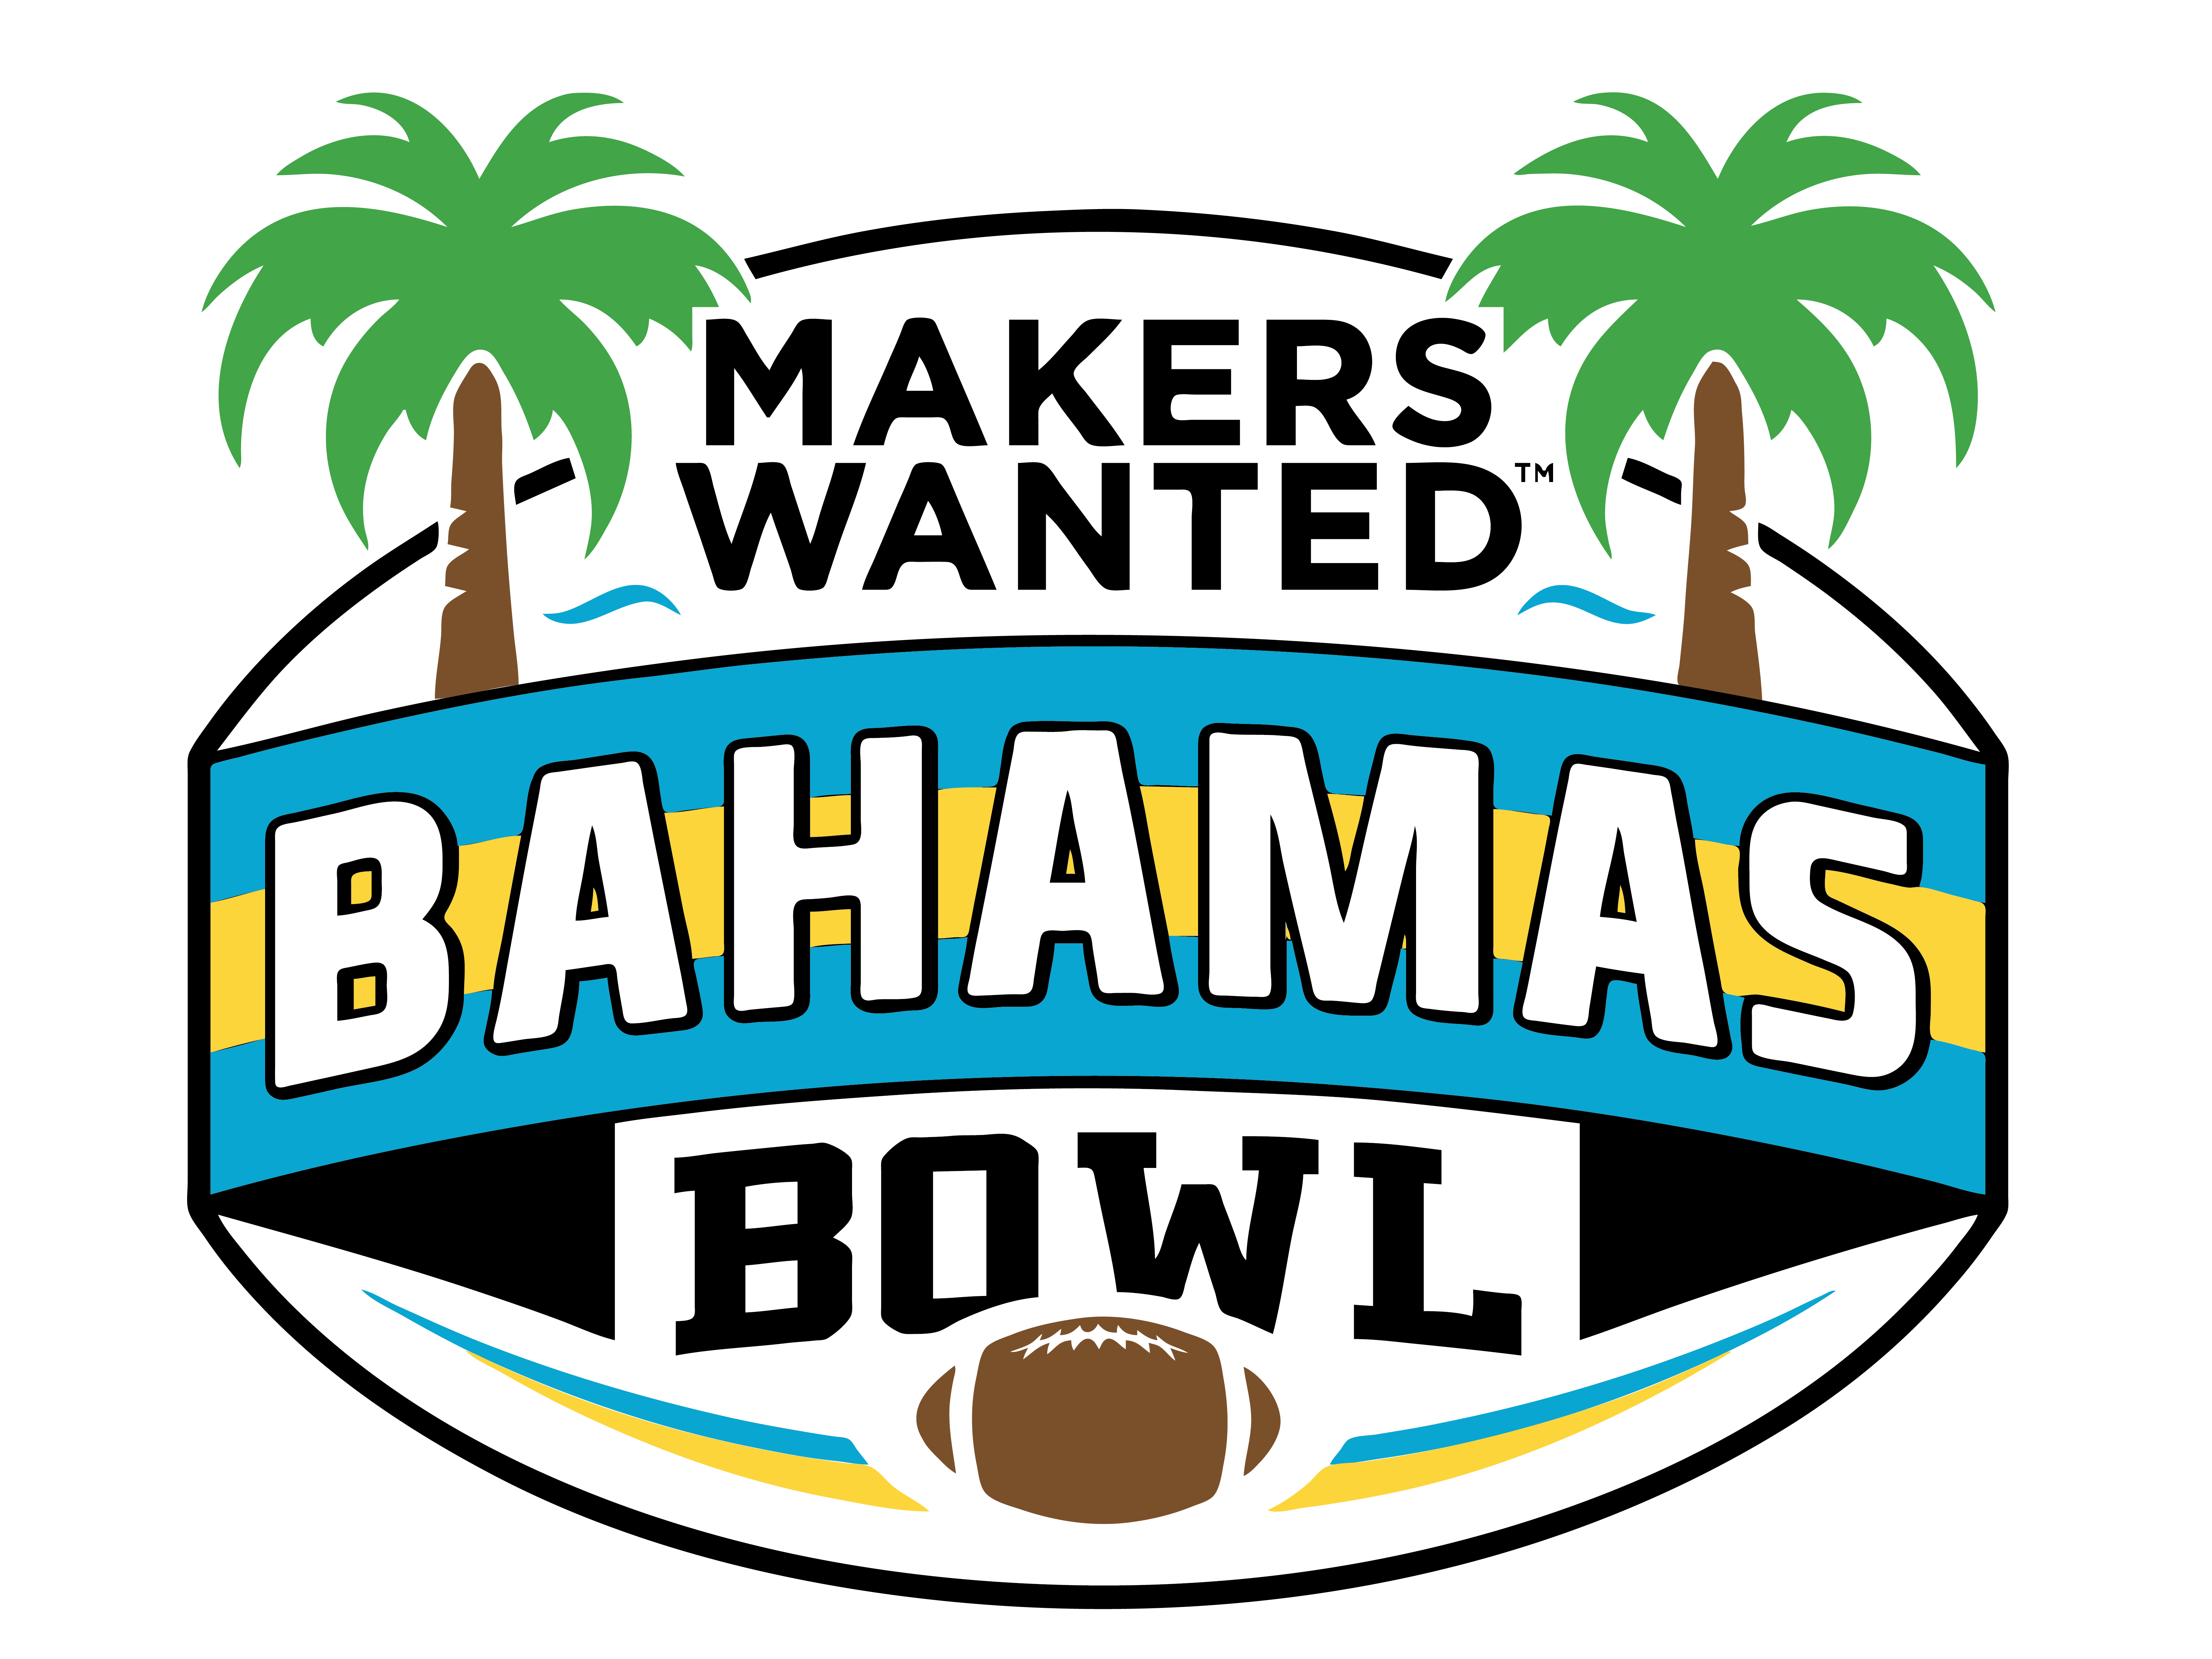 Bahamas Bowl Logo